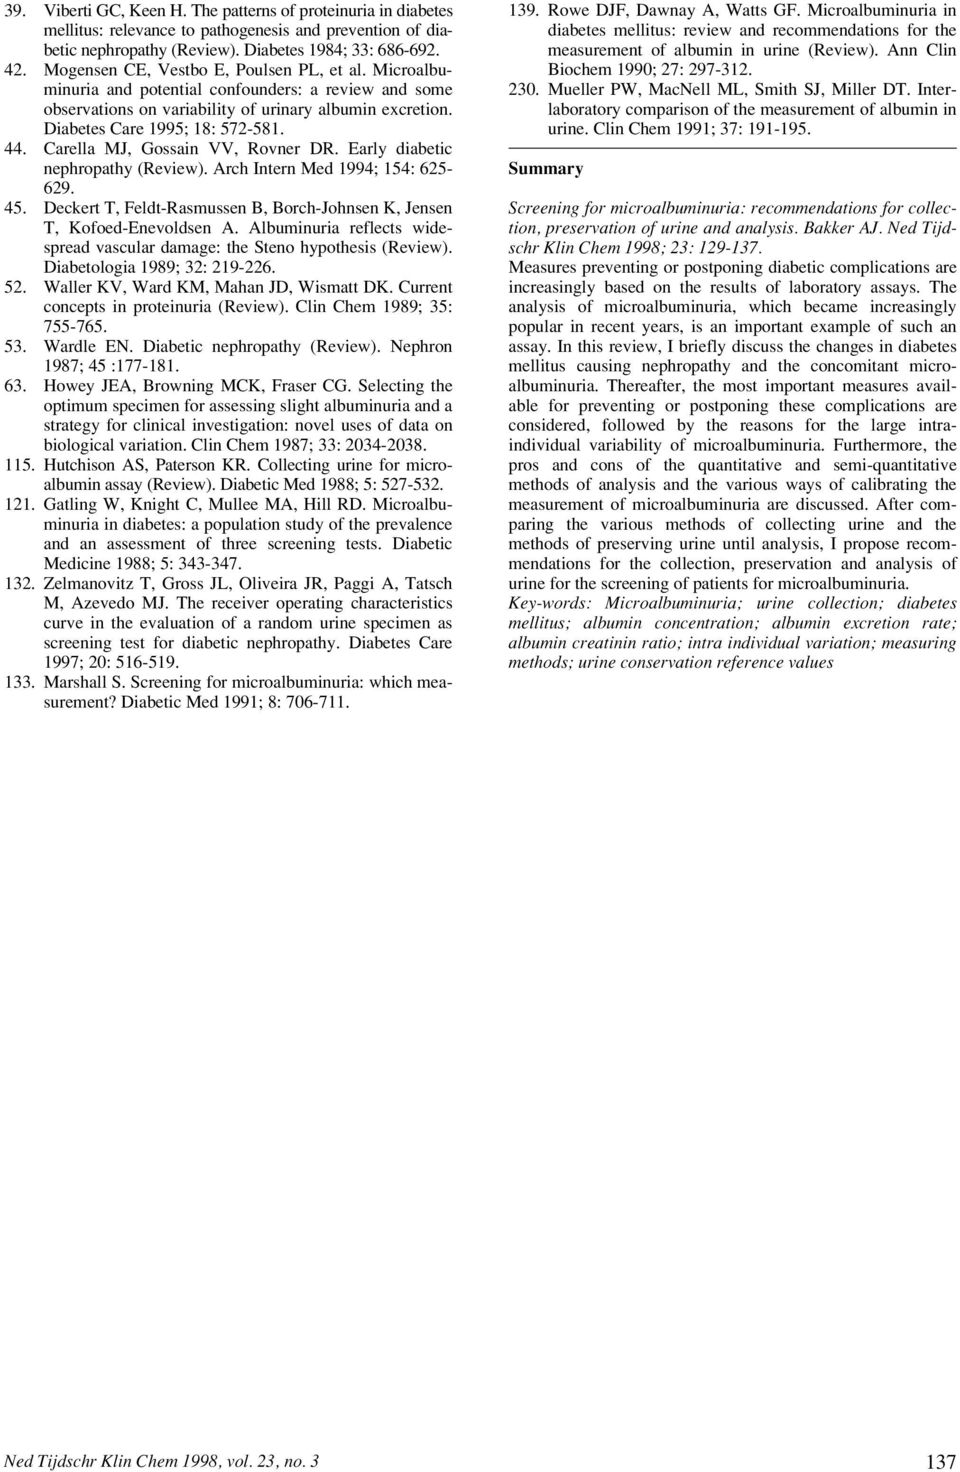 Carella MJ, Gossain VV, Rovner DR. Early diabetic nephropathy (Review). Arch Intern Med 1994; 154: 625-629. 45. Deckert T, Feldt-Rasmussen B, Borch-Johnsen K, Jensen T, Kofoed-Enevoldsen A.